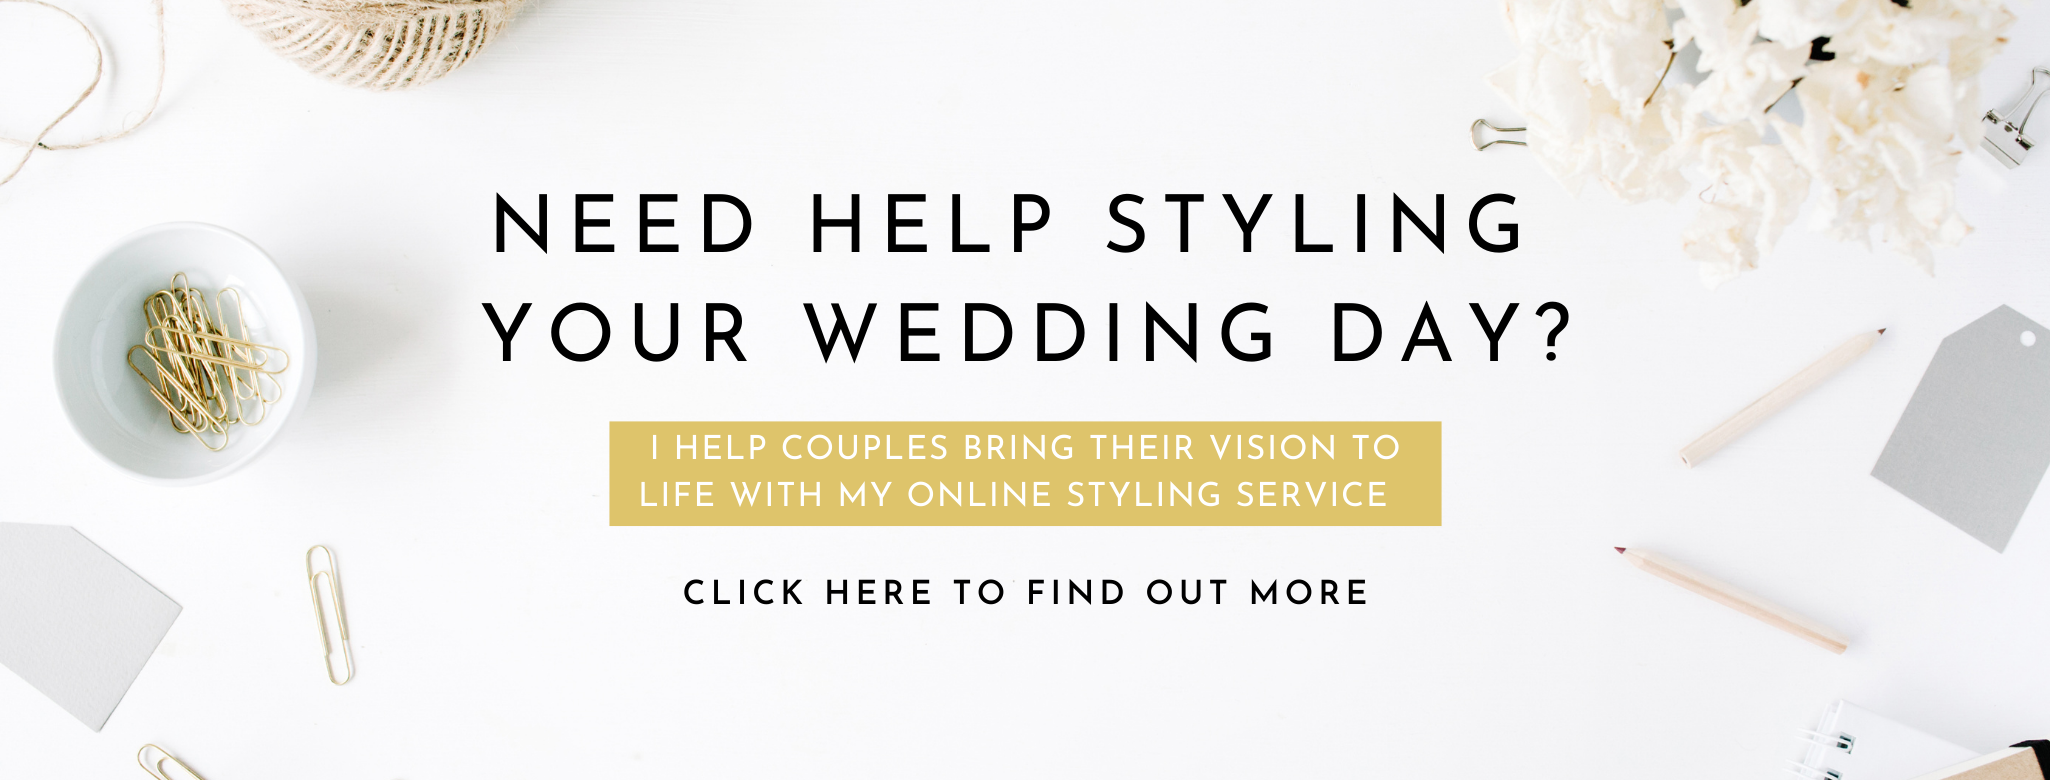 wedding styling banner